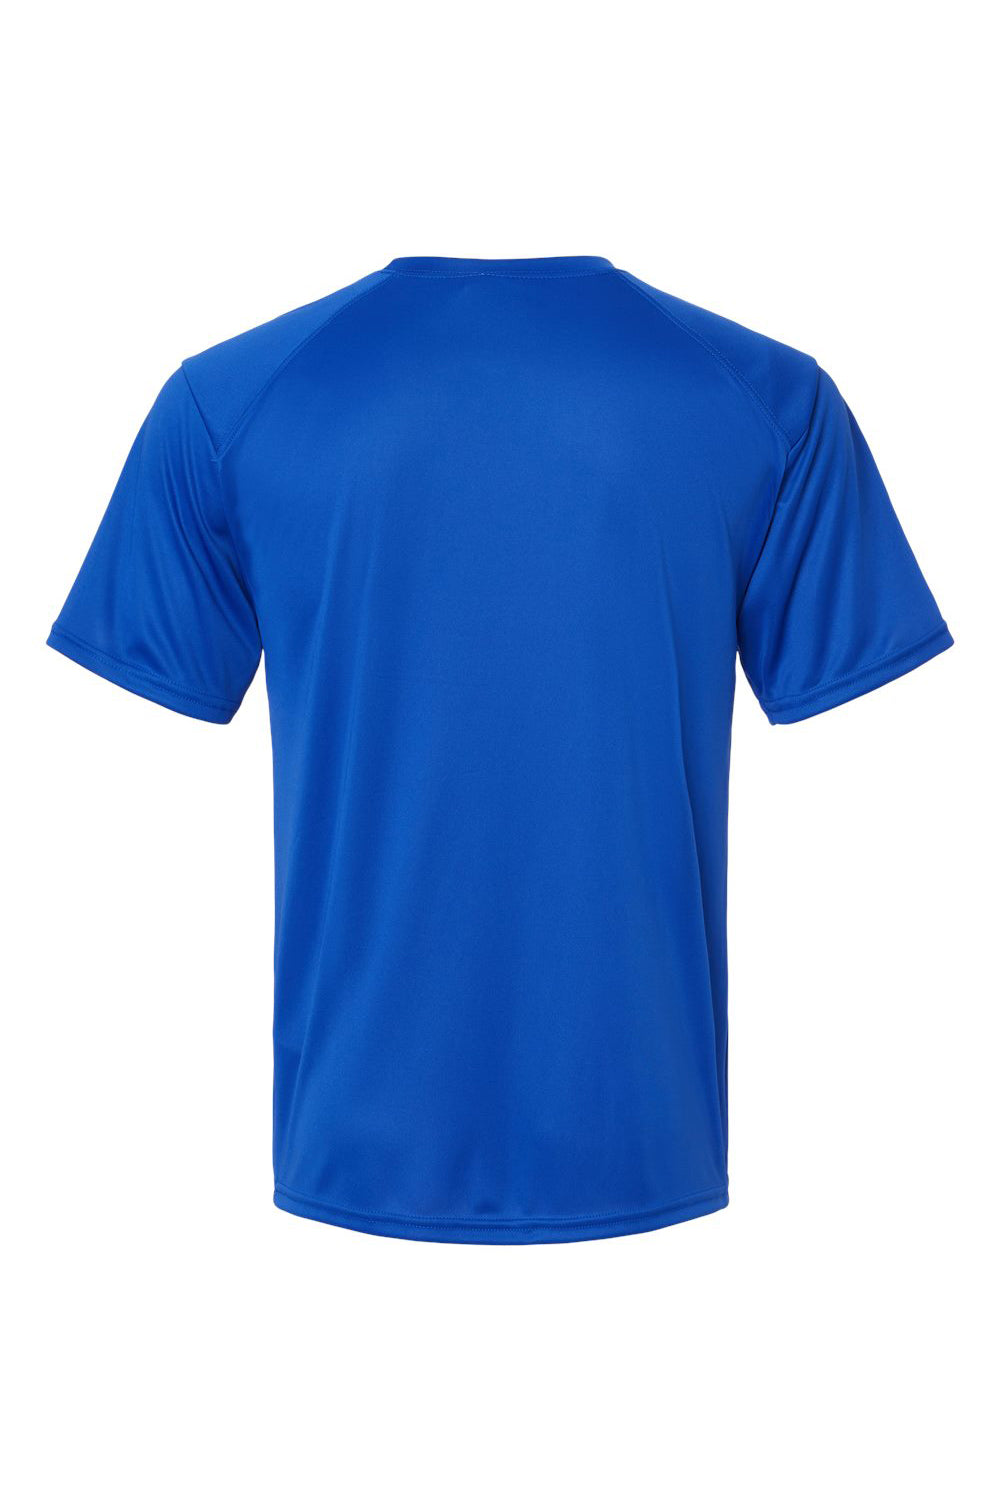 Paragon 200 Mens Islander Performance Short Sleeve Crewneck T-Shirt Royal Blue Flat Back